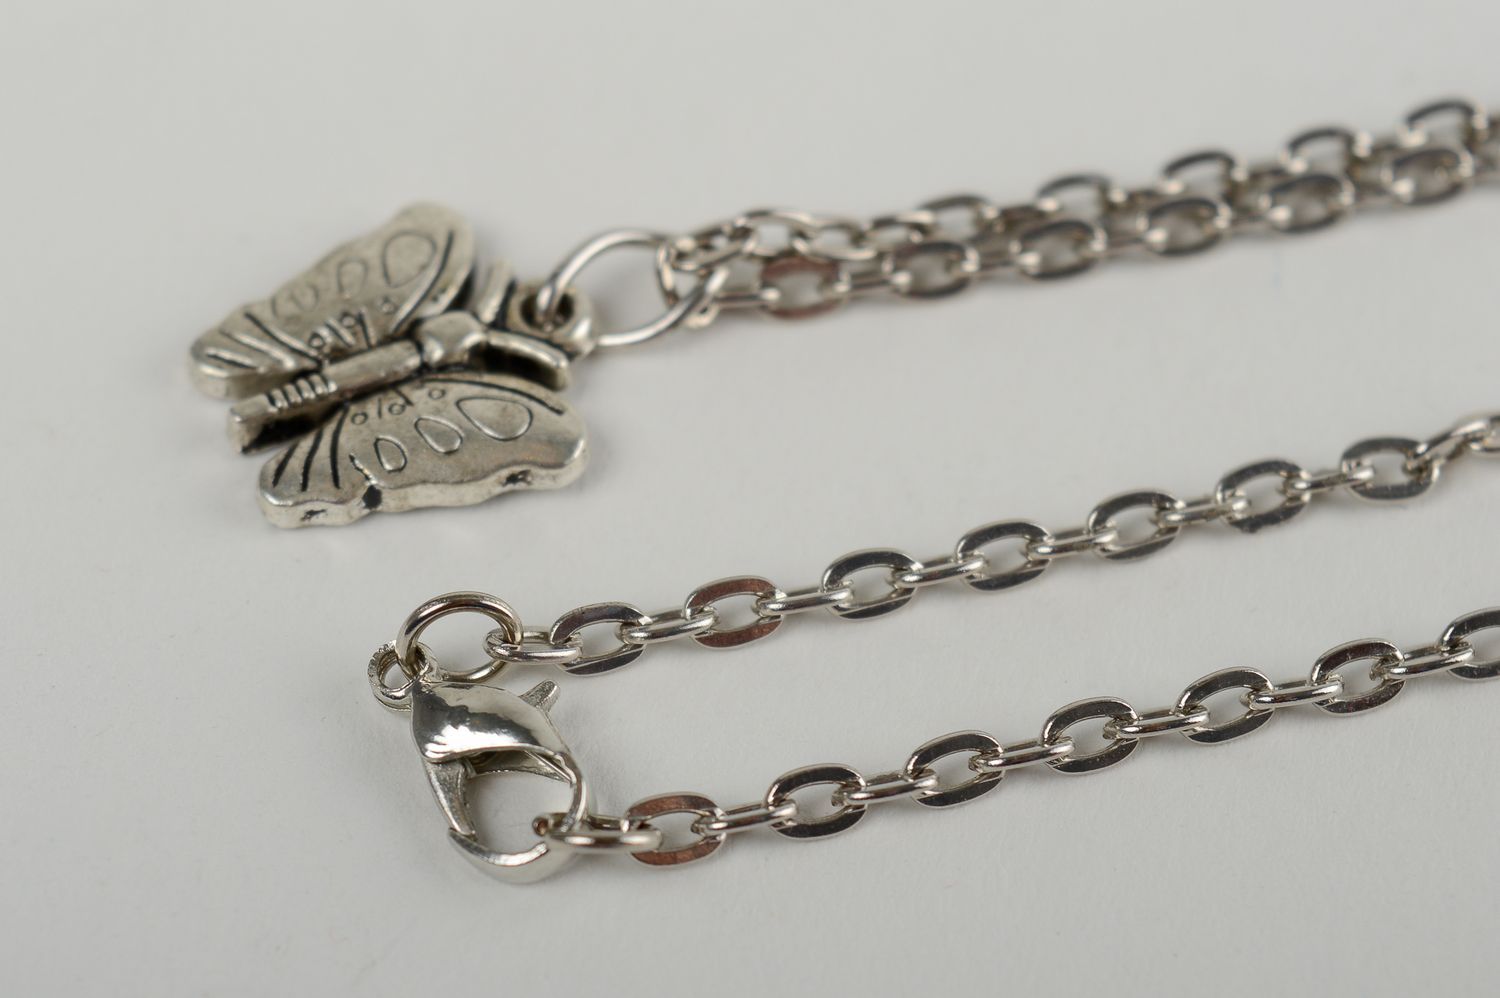 Vintage pendant handmade pendant on chain metal pendant metal jewelry for girls photo 3